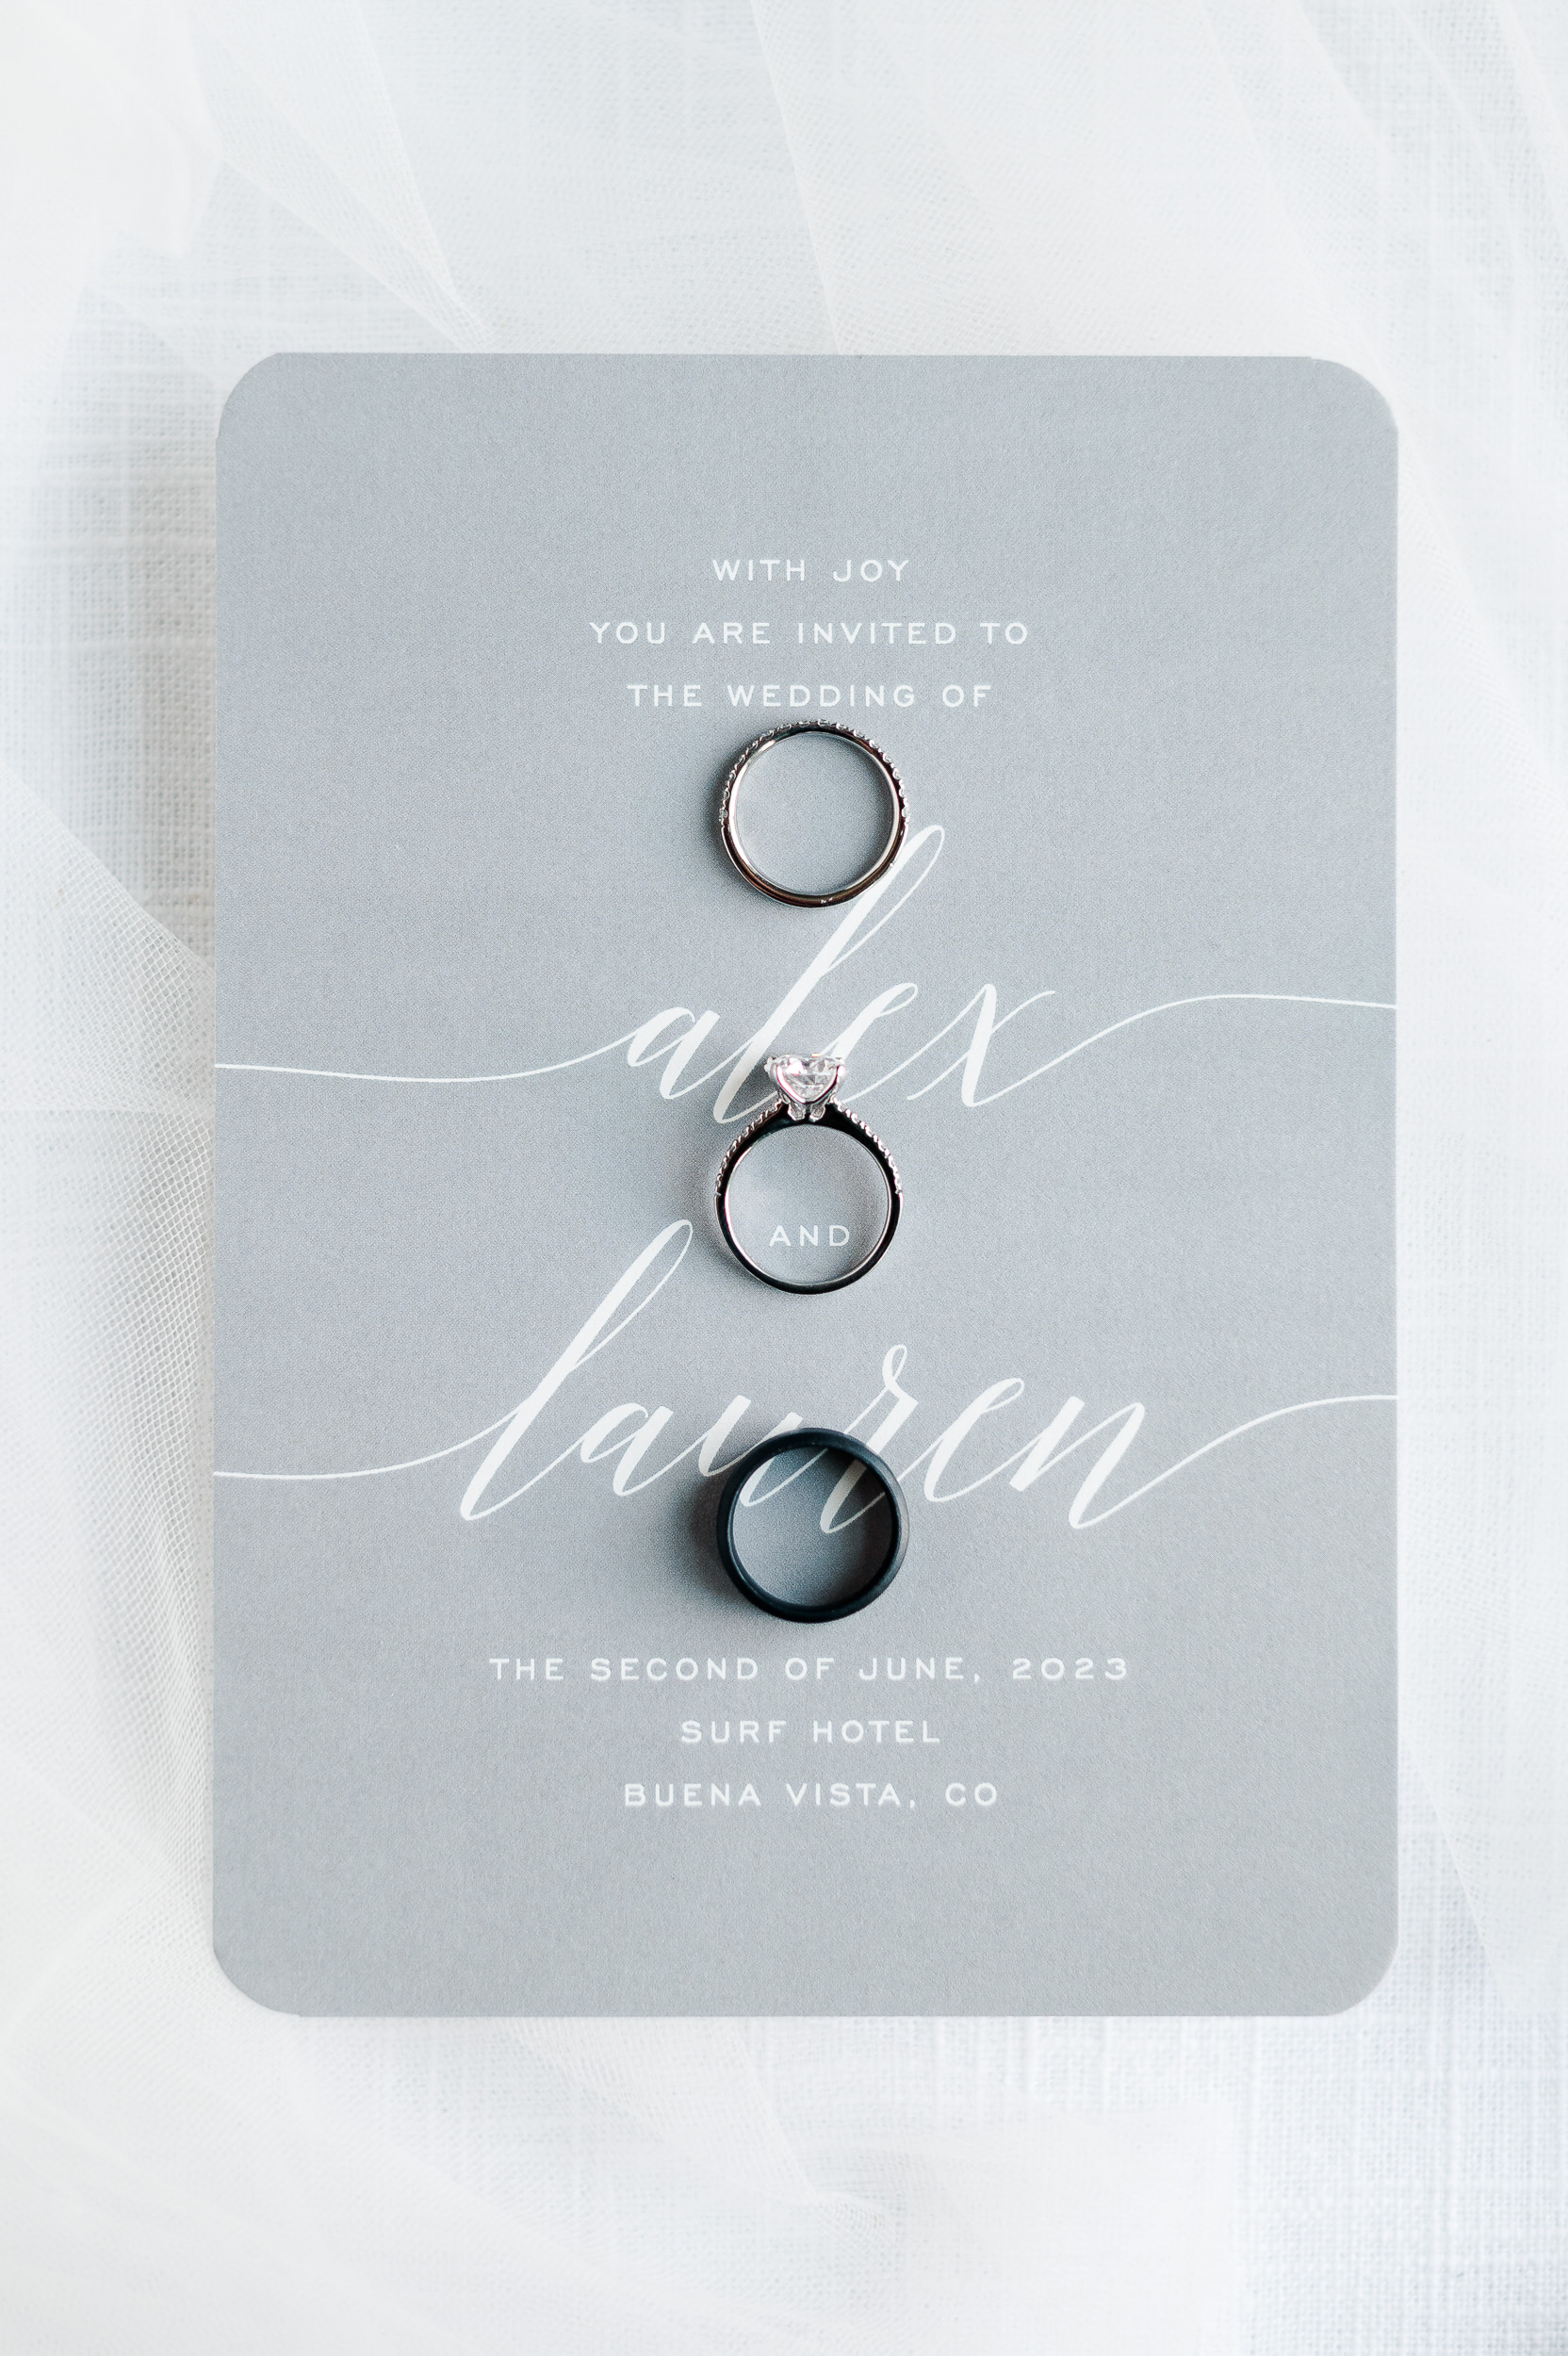 Close up photo of three wedding rings laying on a wedding invitation.